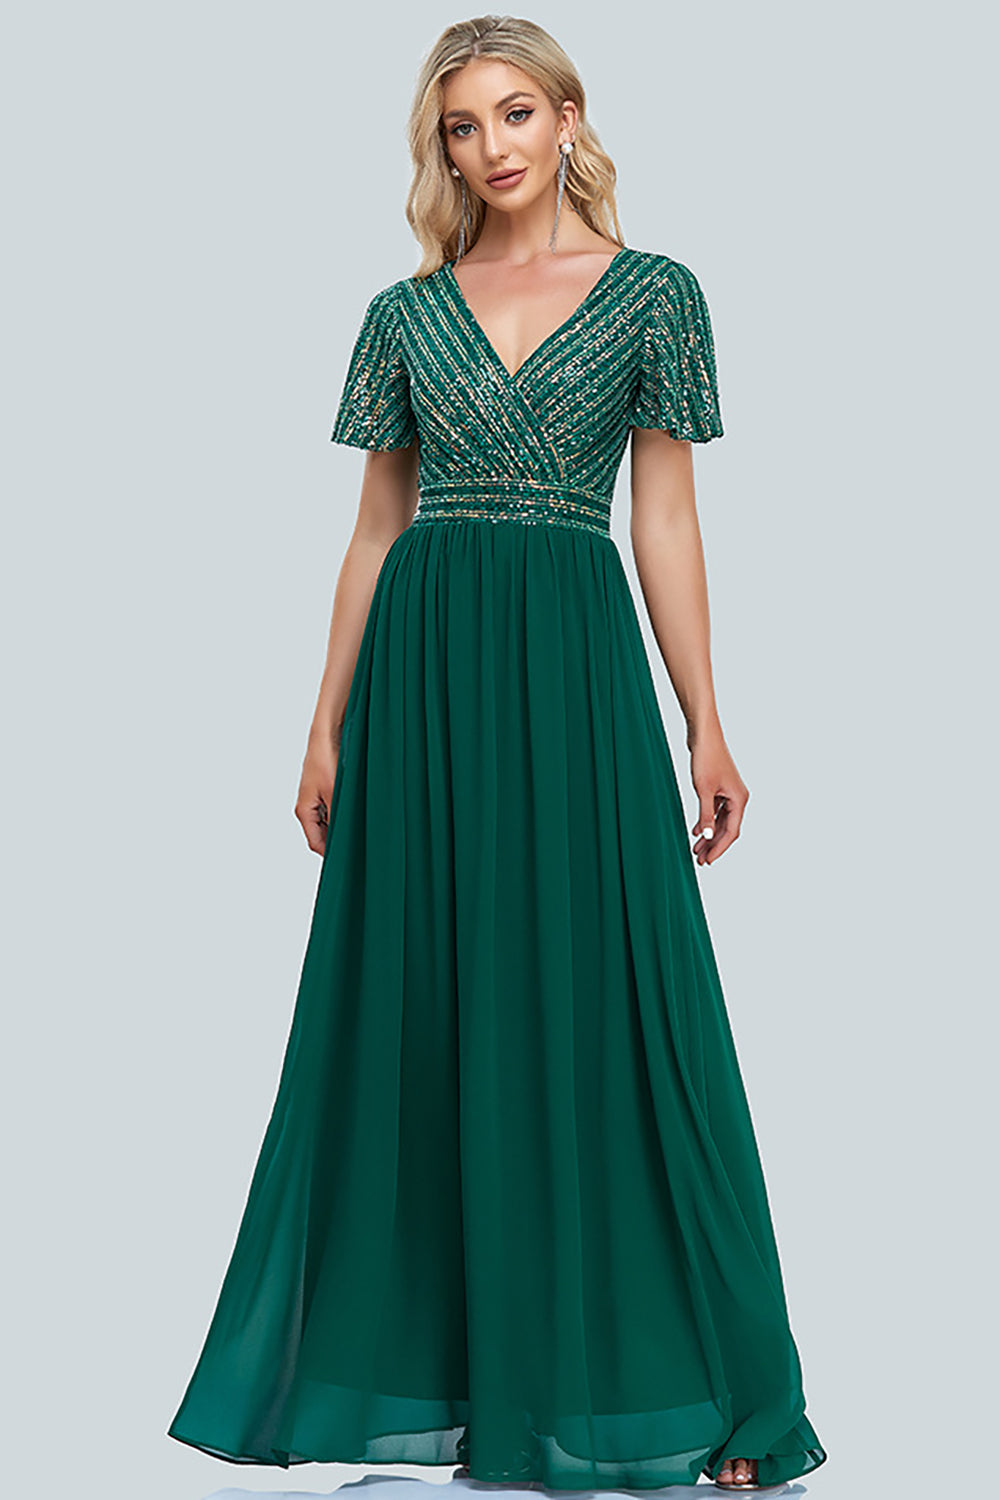 Women's Green Plus Size A Line V Neck Evening Dress Sequined Chiffon Swing Dress